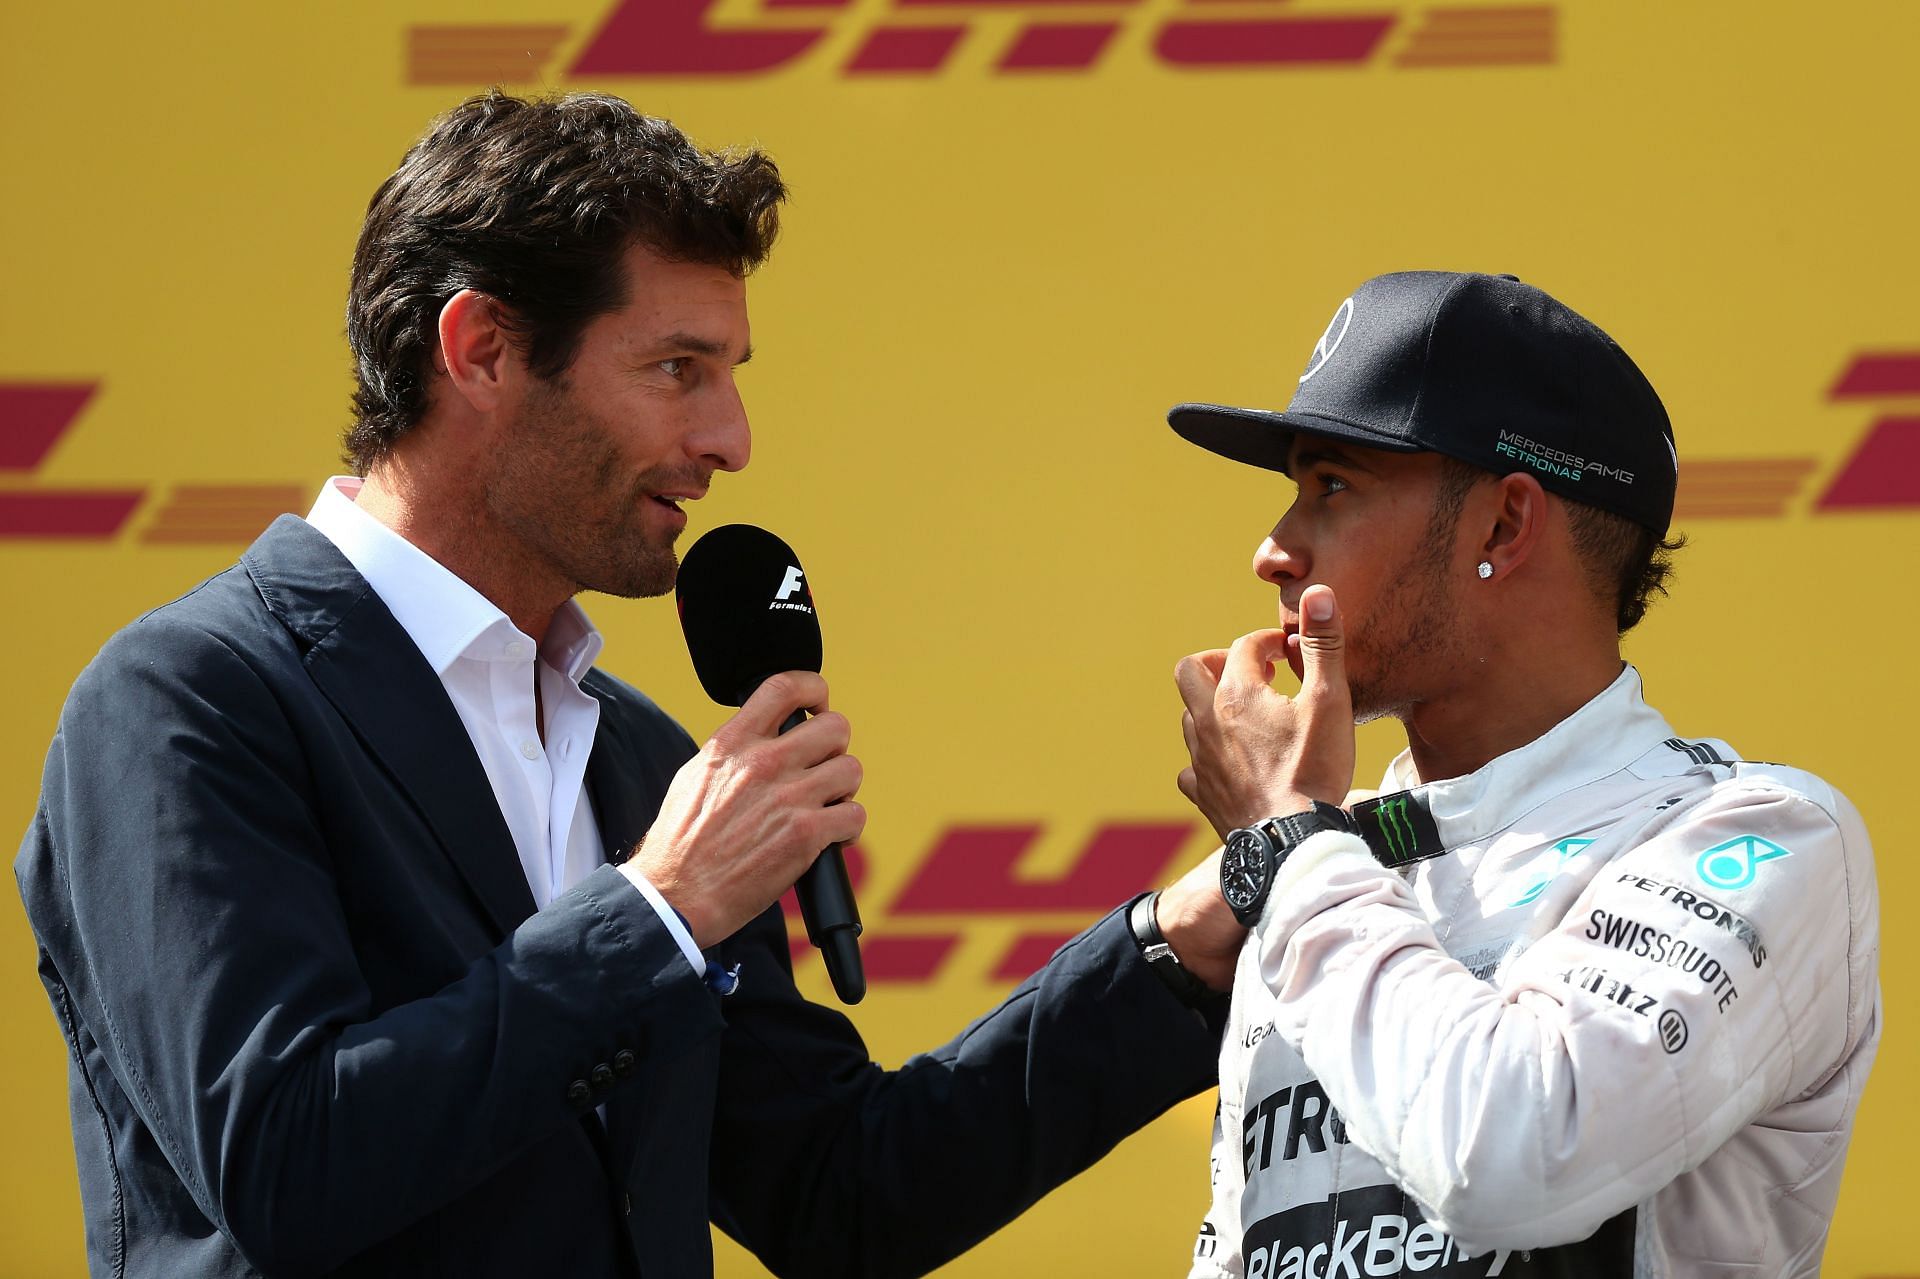 F1 Grand Prix of Austria - Mark Webber (left) interviews Lewis Hamilton on the podium